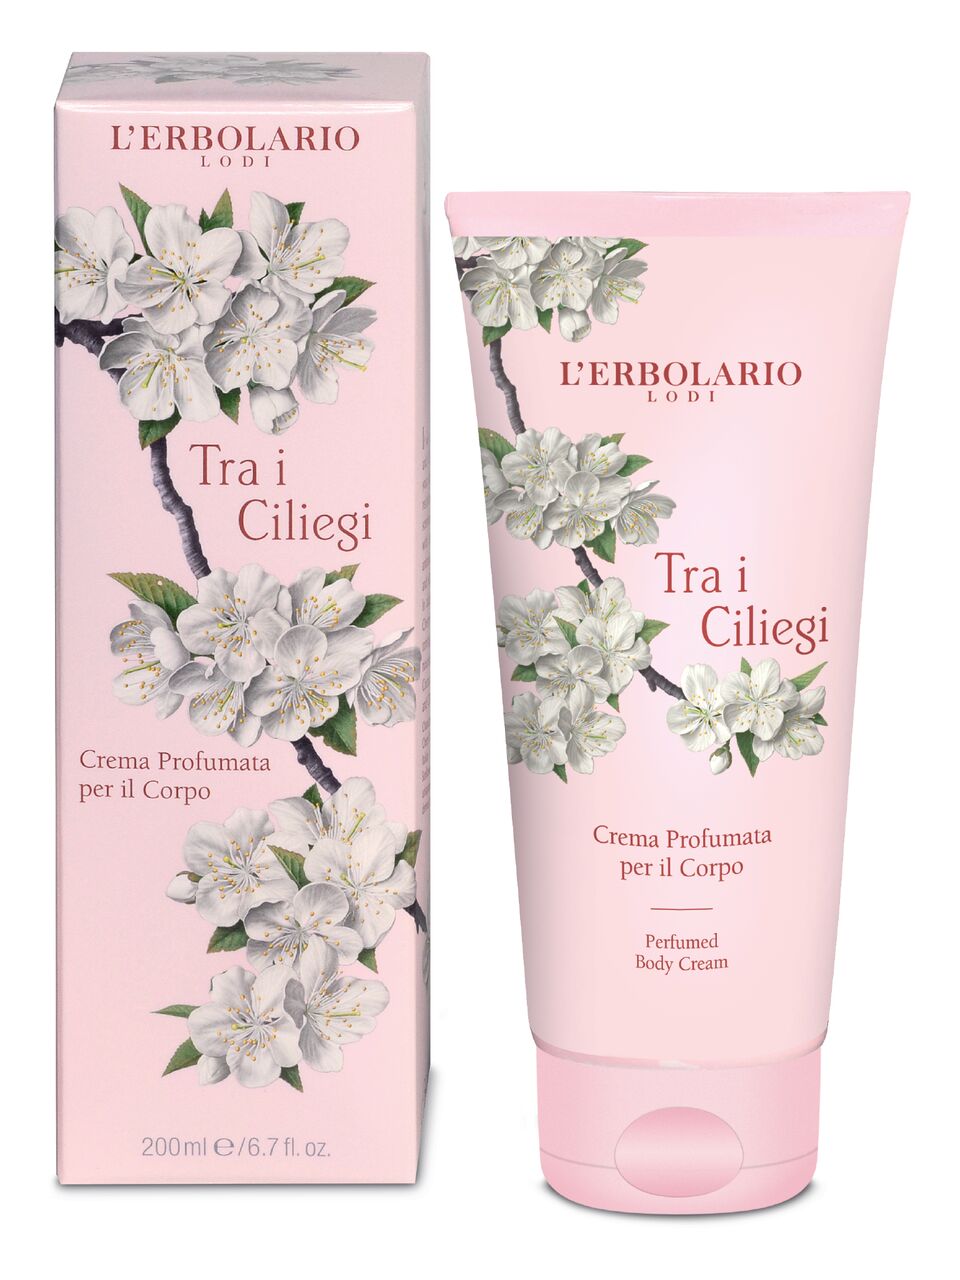 L'ERBOLARIO Perfumed Body Cream with Cherry Blossom & Italian Cherry Extract